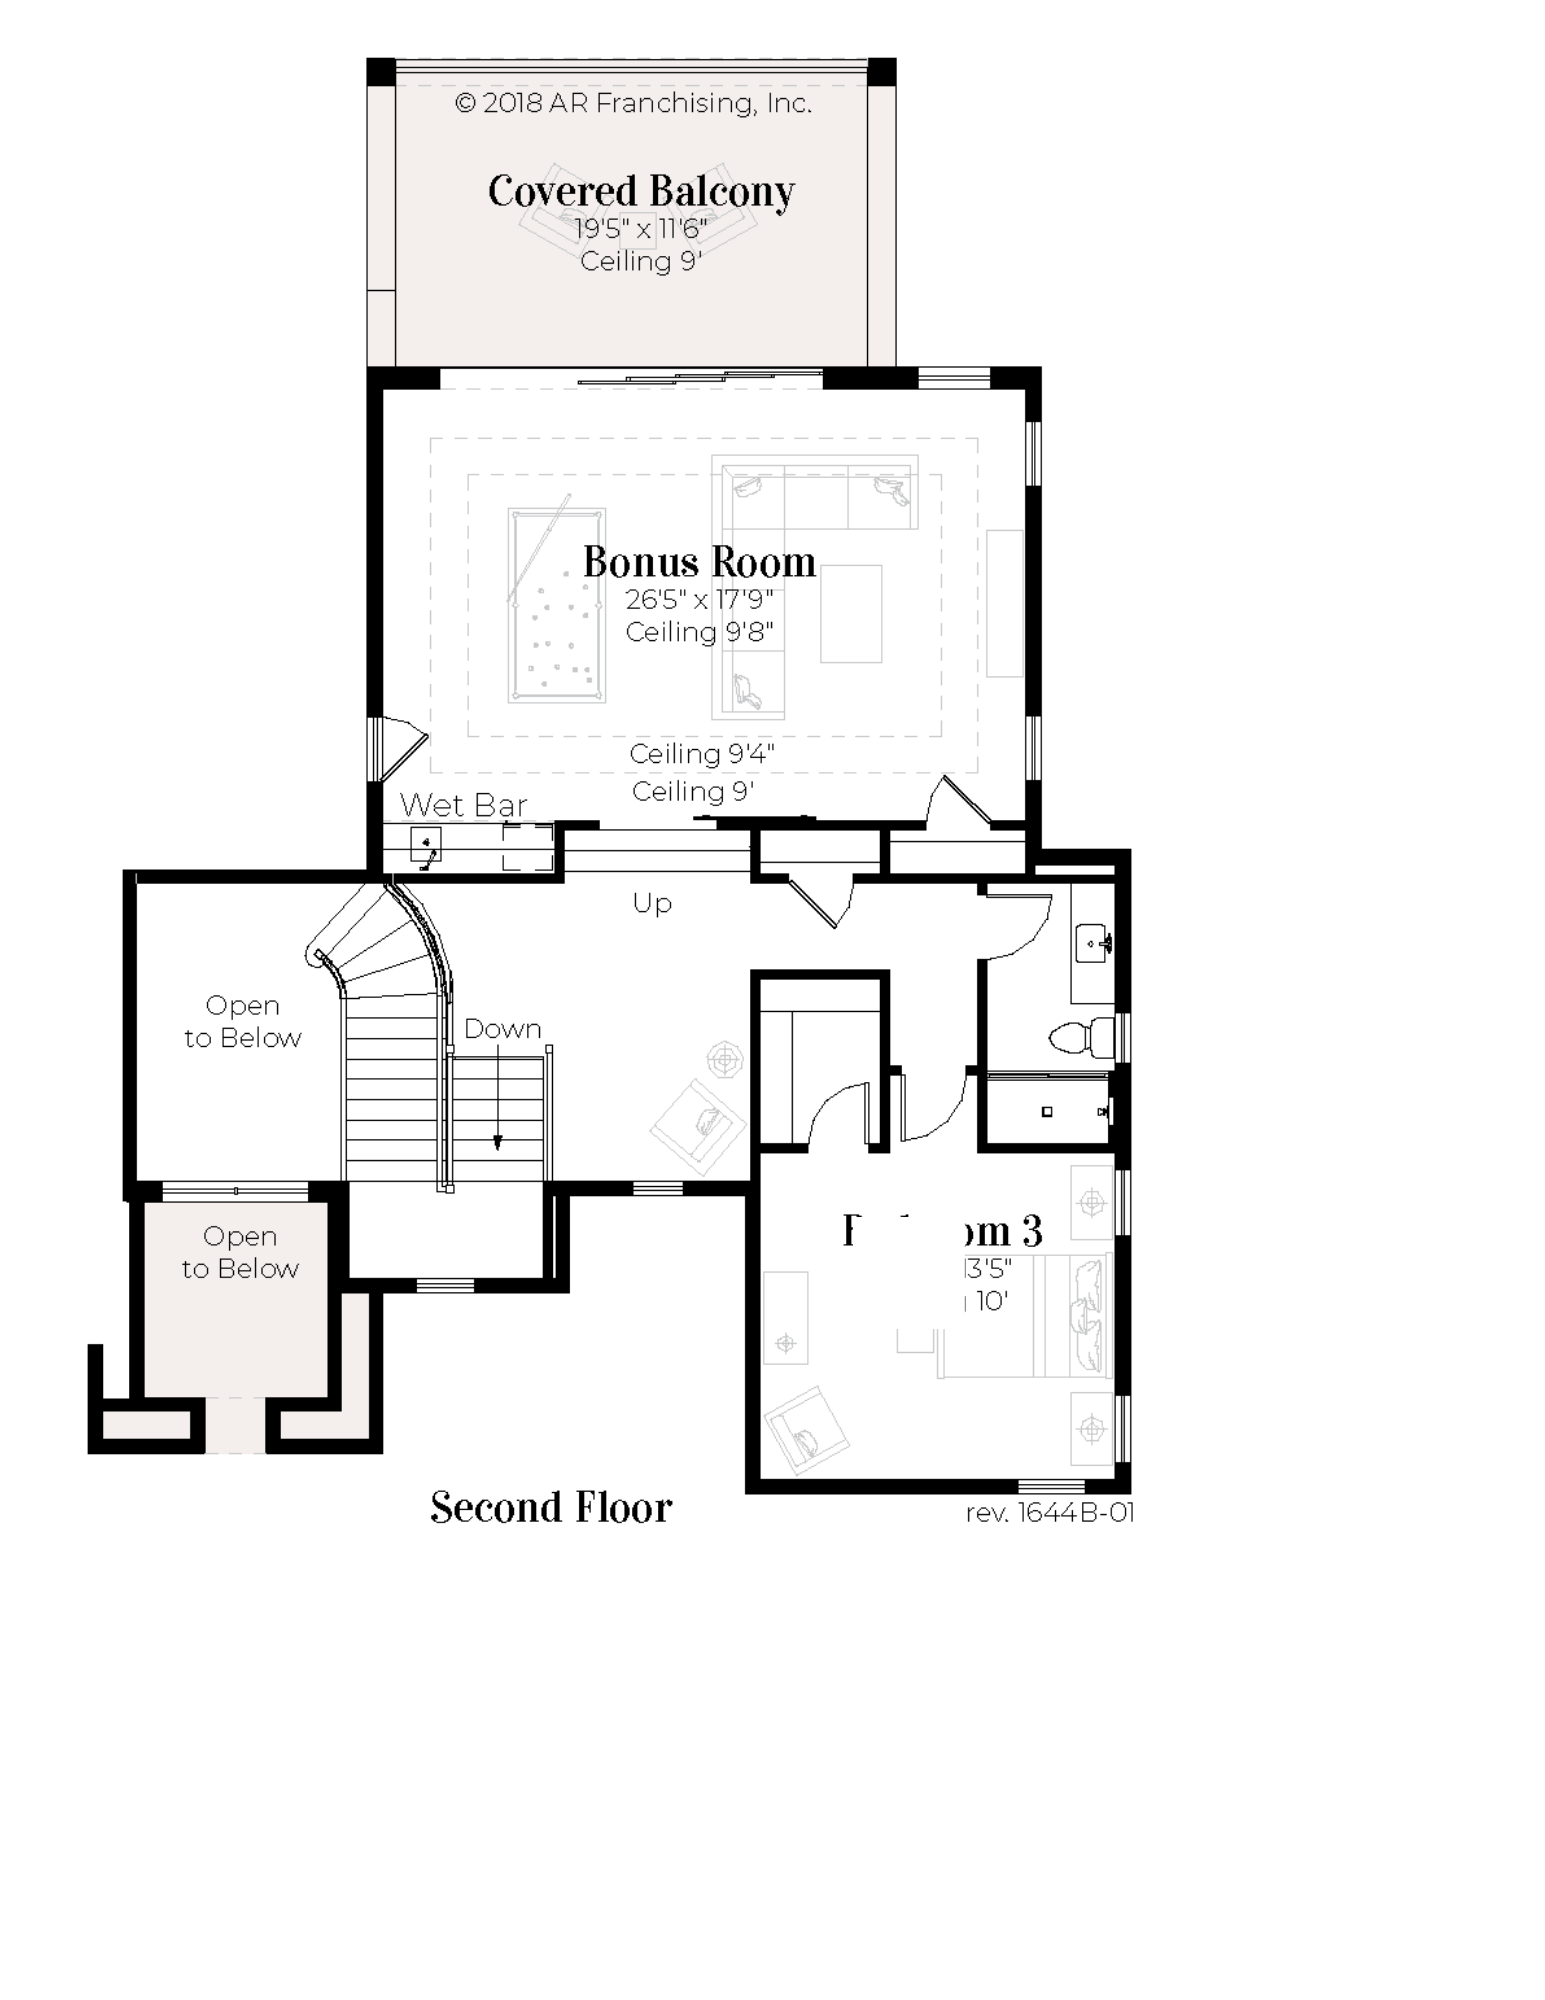 Bexley-AR Homes-Treviso second floor